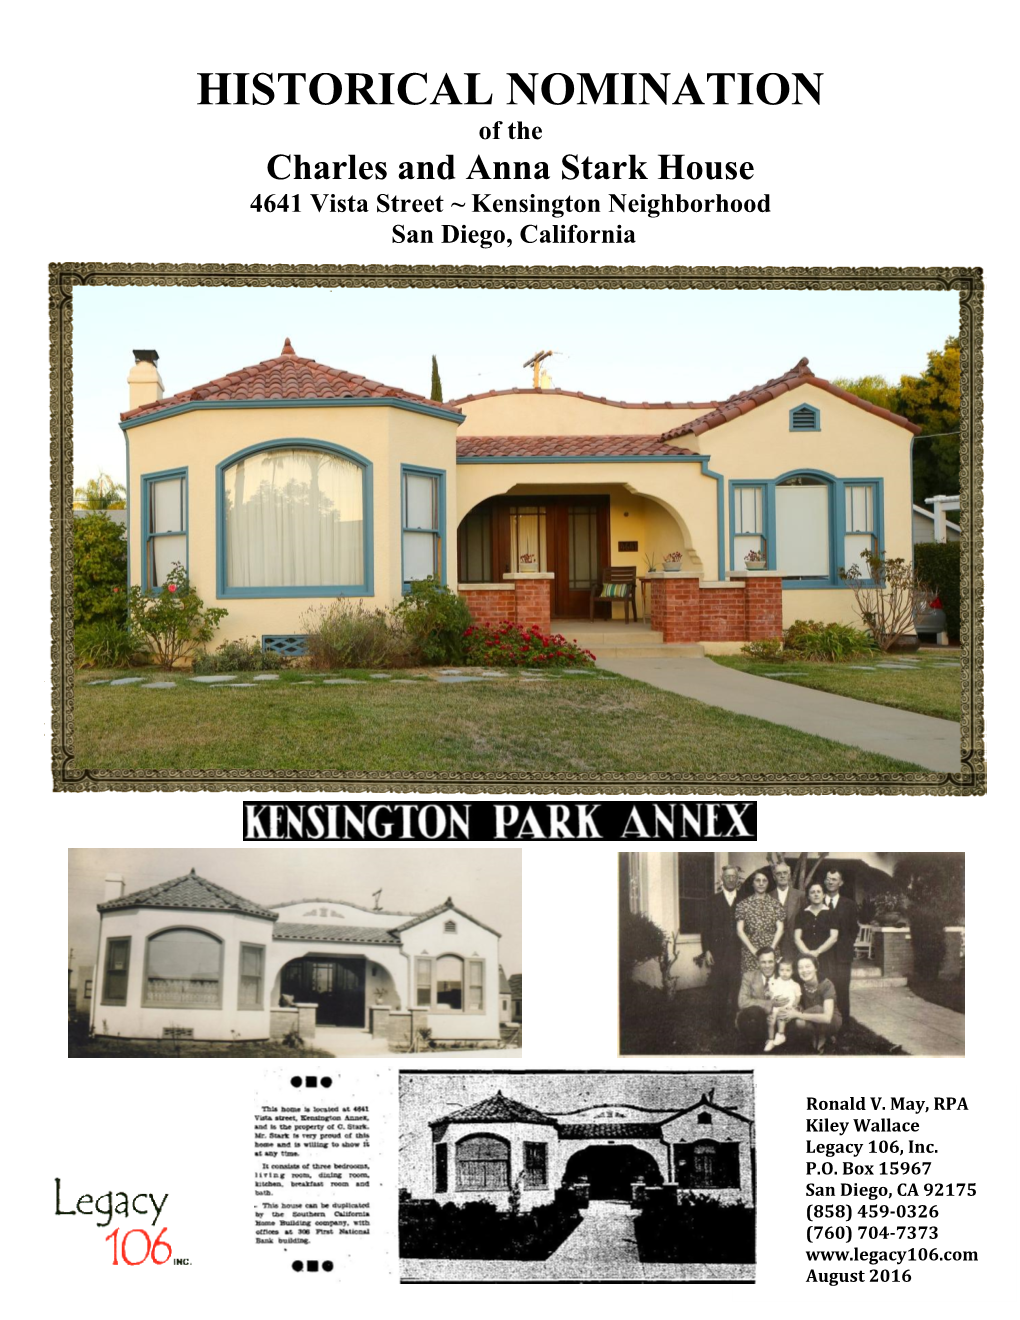 HISTORICAL NOMINATION of the Charles and Anna Stark House 4641 Vista Street ~ Kensington Neighborhood San Diego, California